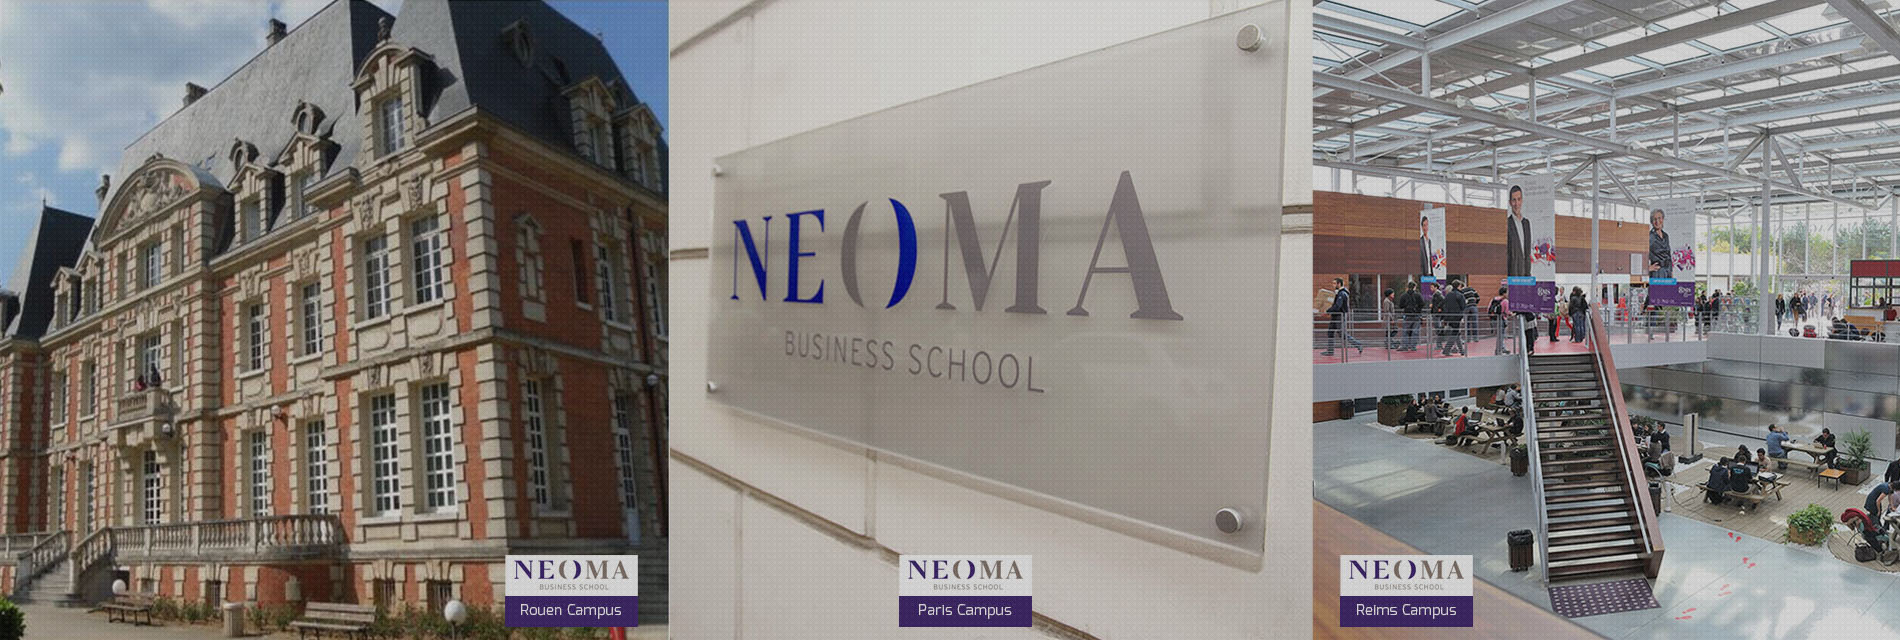 Neoma business school